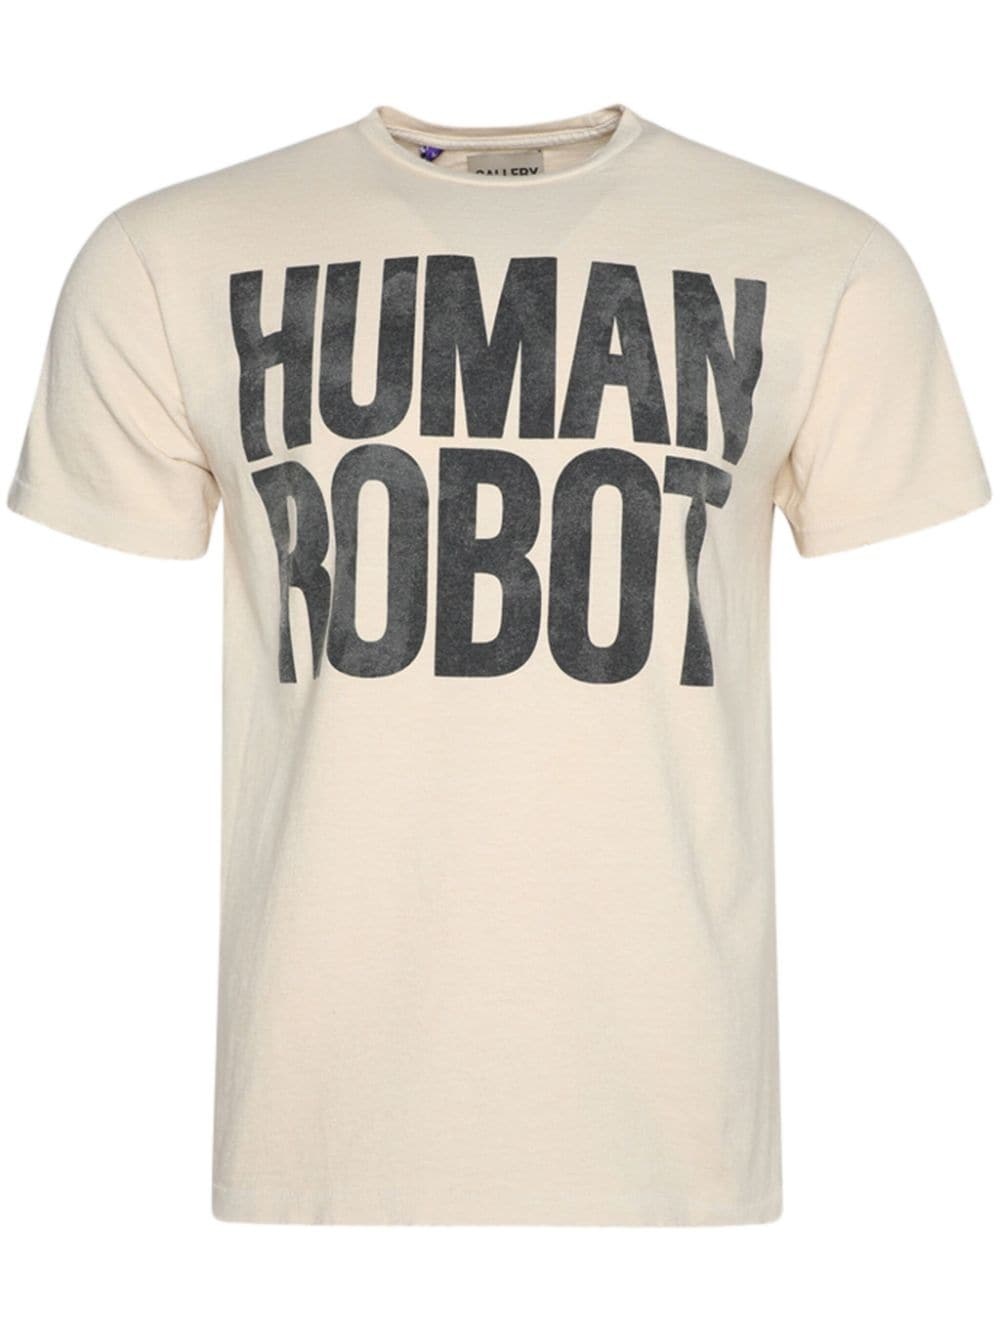 Human Robot cotton T-shirt - 1